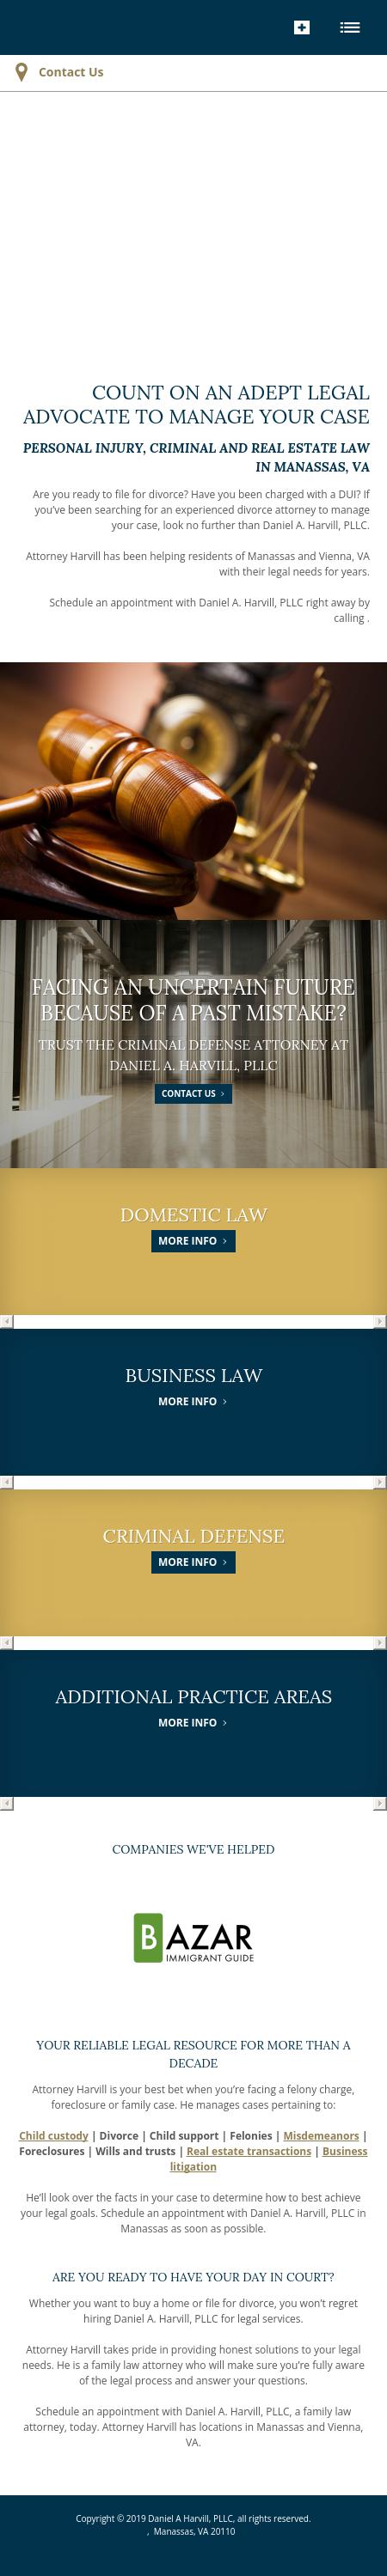 Daniel A. Harvill, PLLC - Manassas VA Lawyers